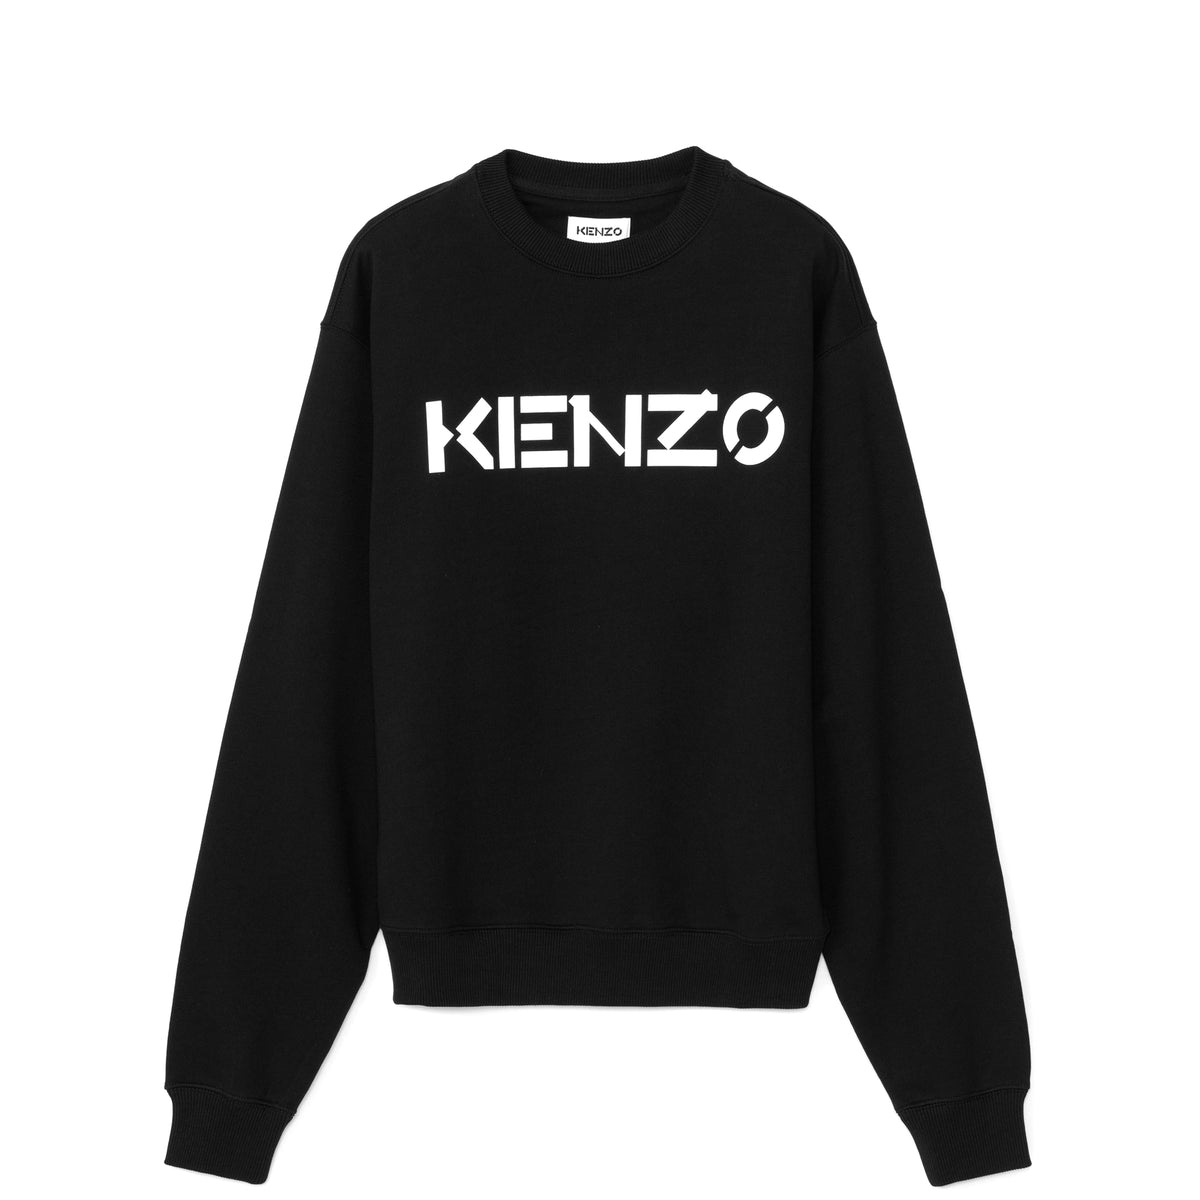 Kenzo Men's New Logo Sweatshirt